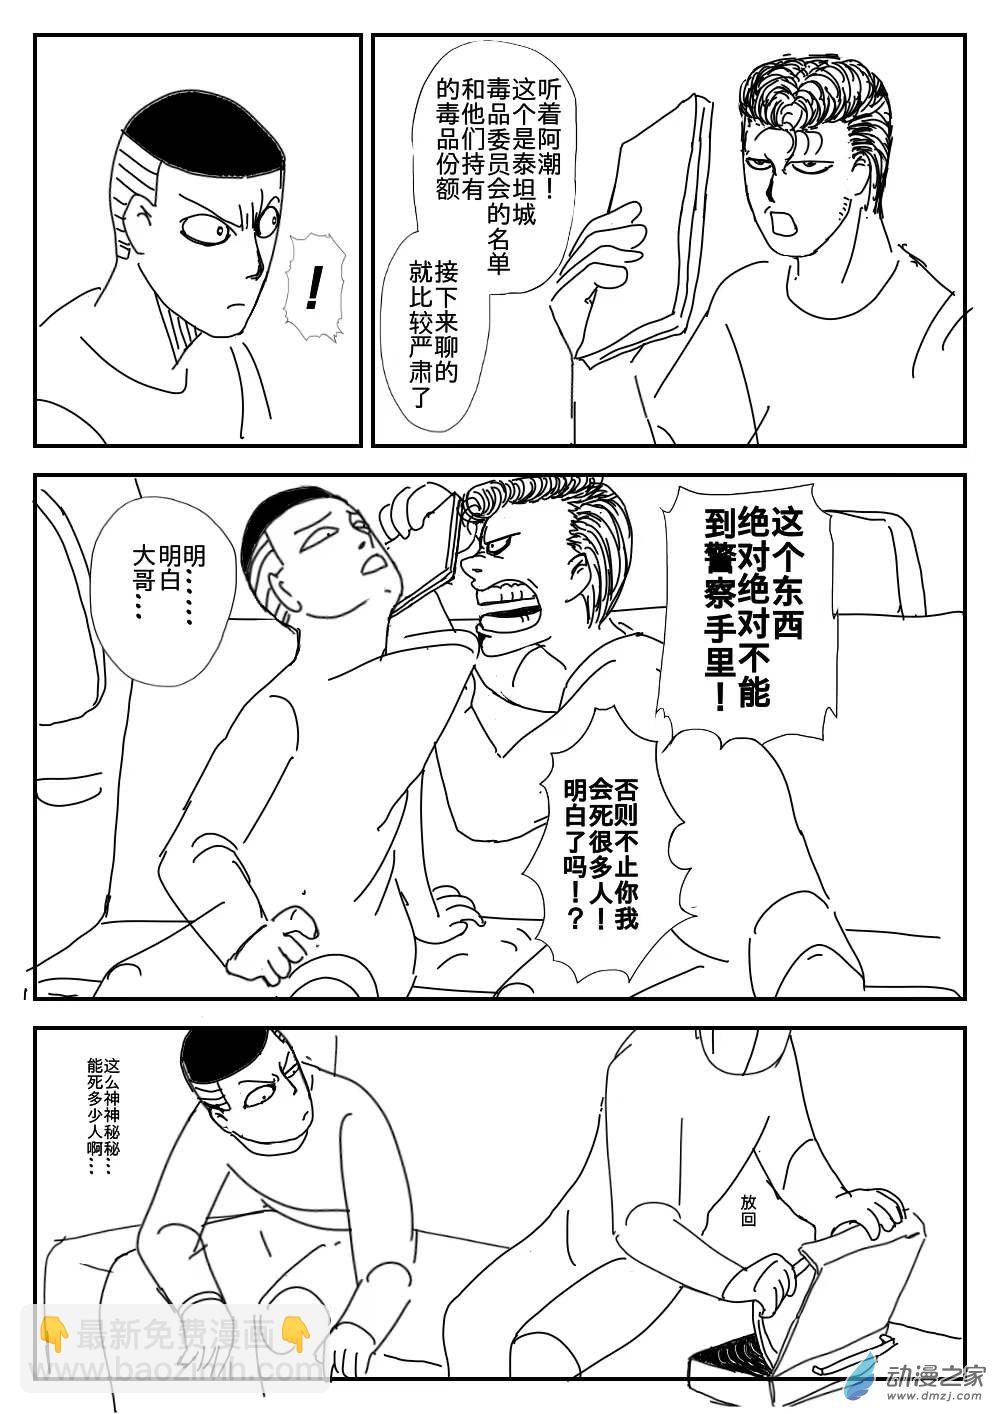 K神的短篇漫畫集 - 01 臥底阿潮 - 5